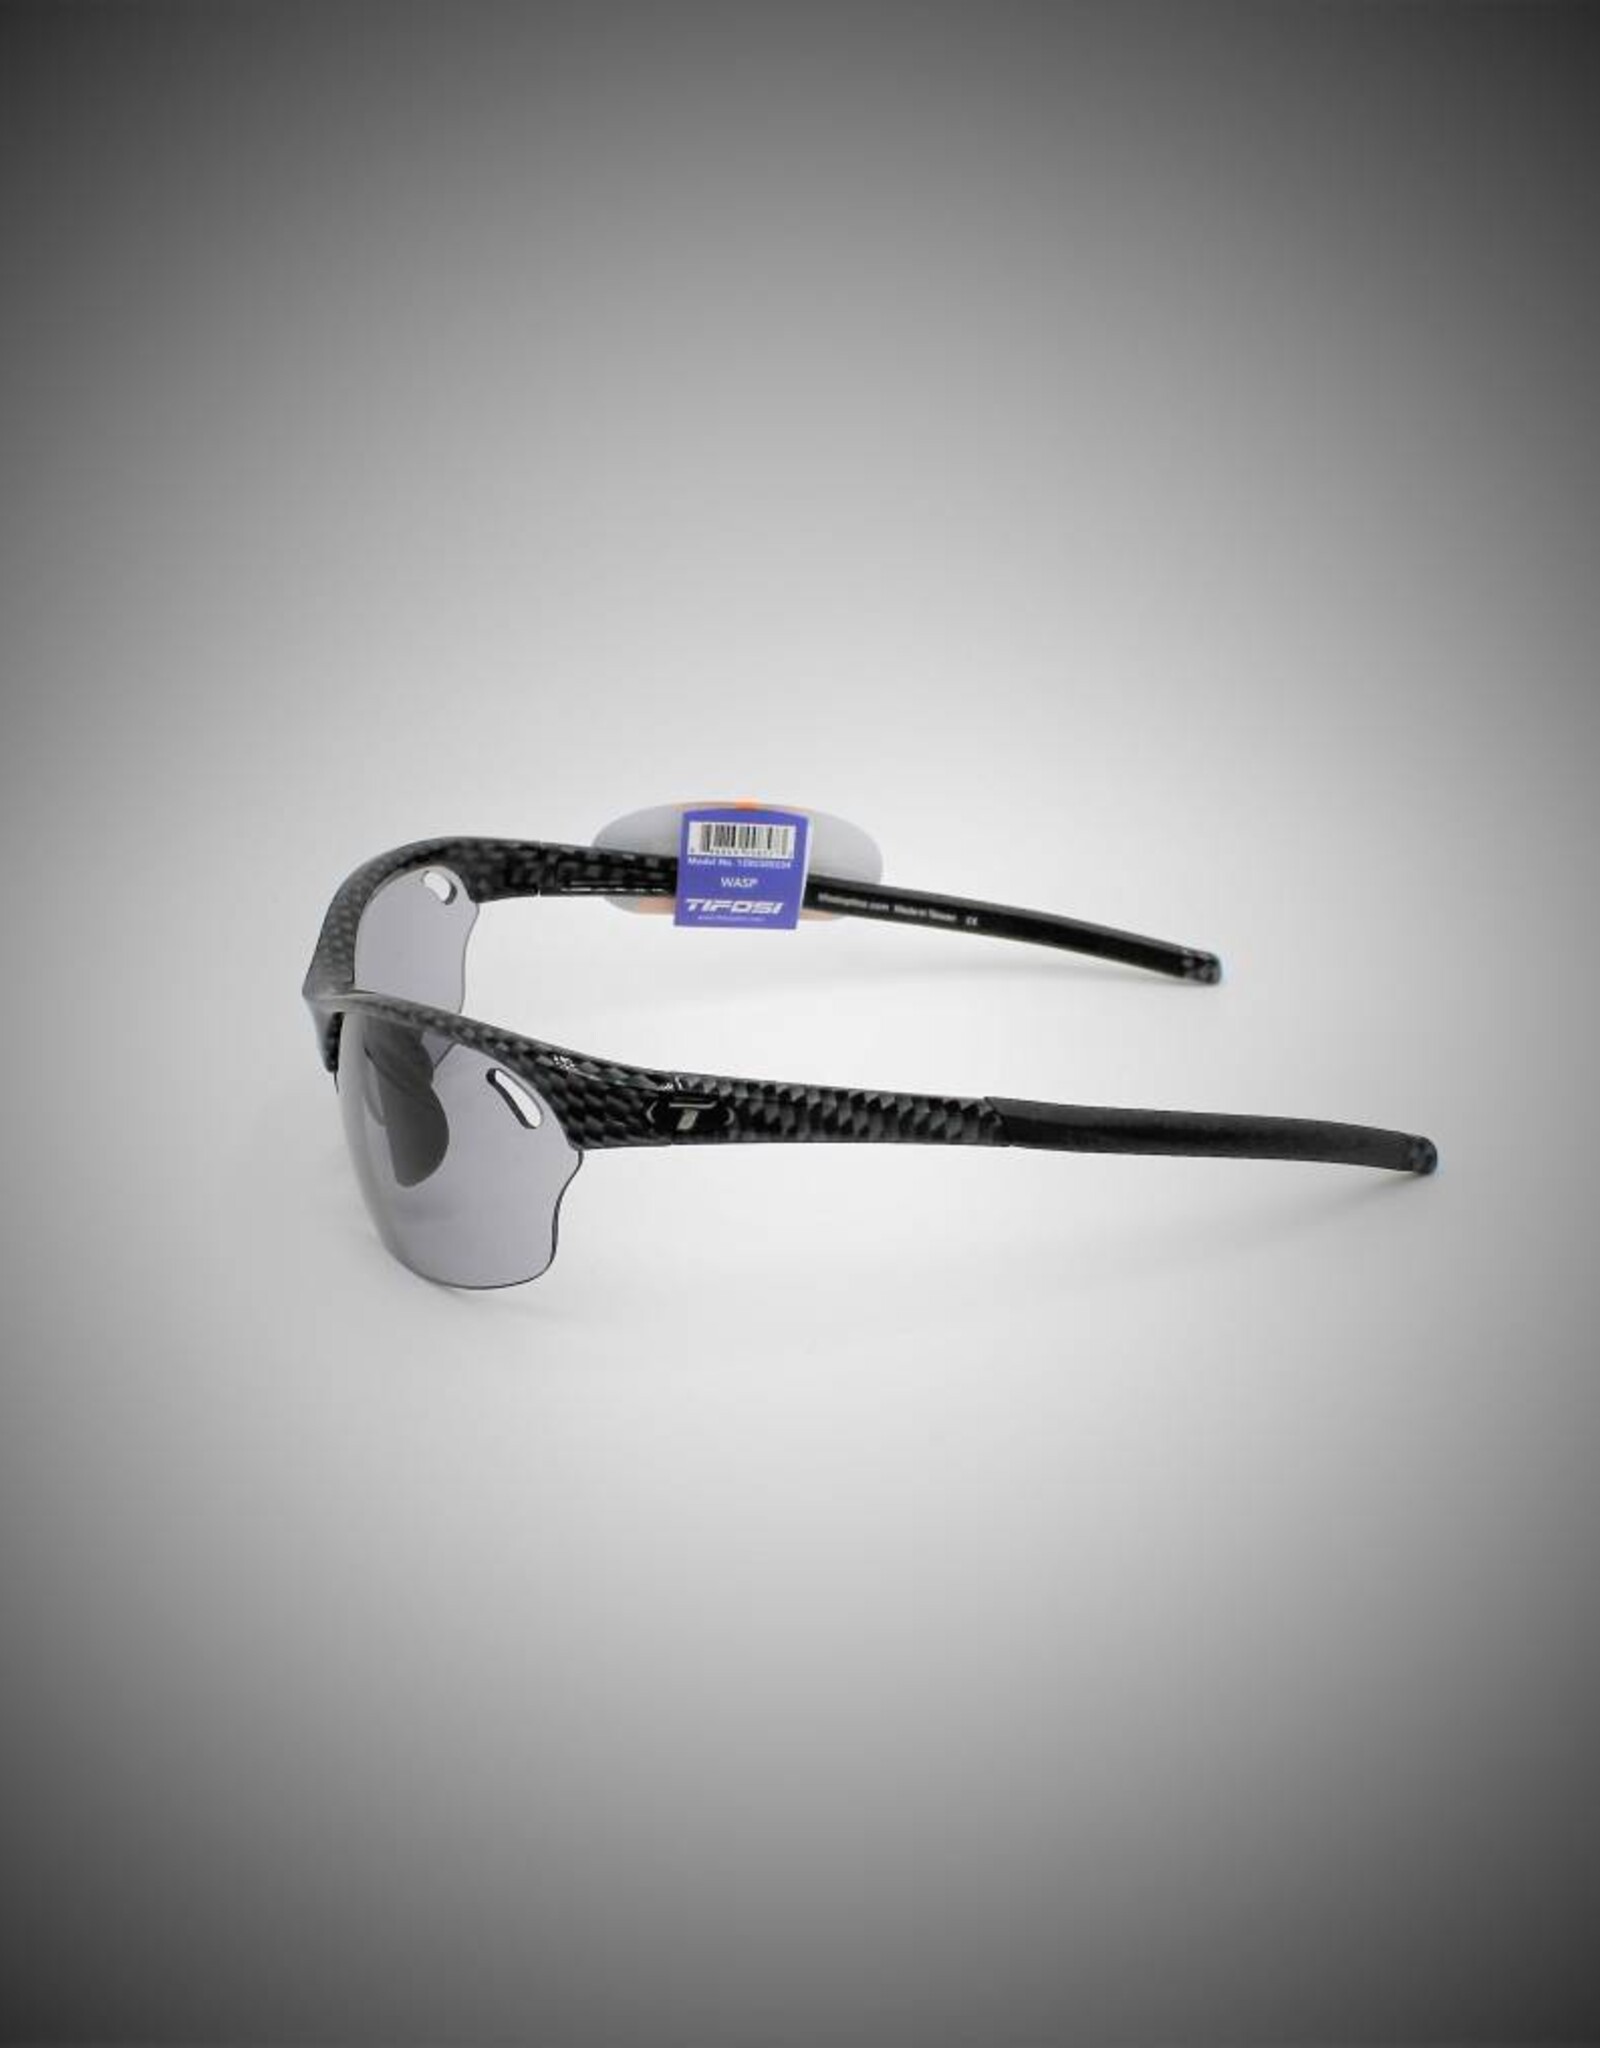 Tifosi Optics Wasp, Gloss Carbon Fototec Sunglasses